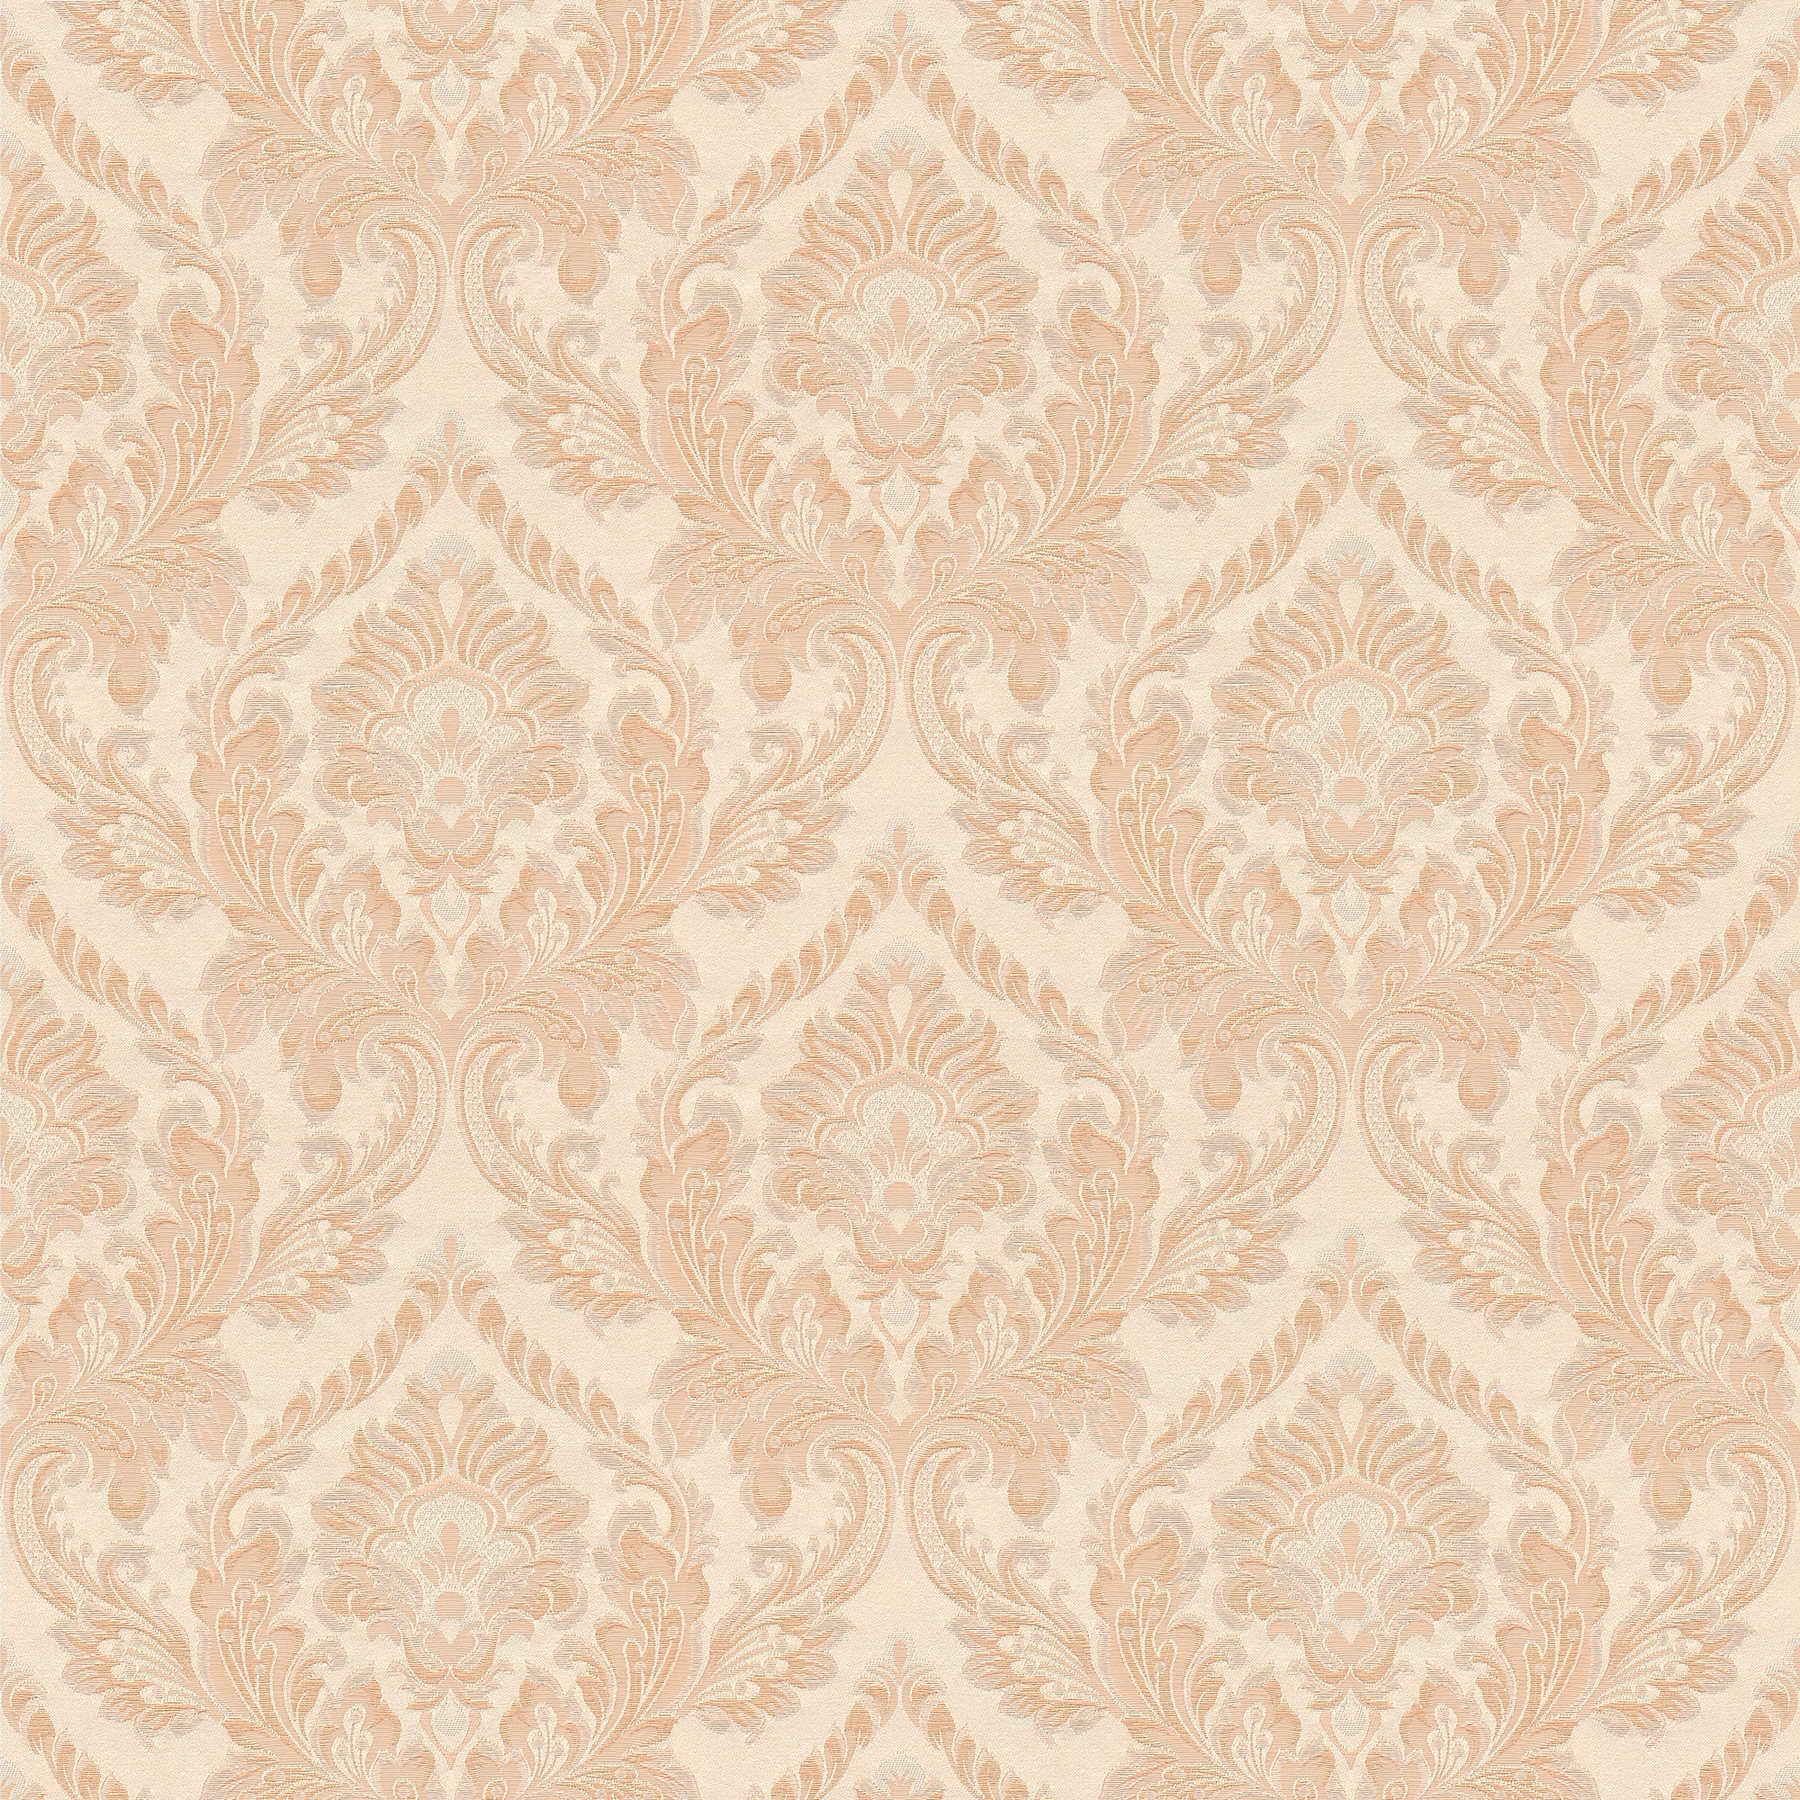         Wallpaper with jacquard ornament pattern - beige, orange
    